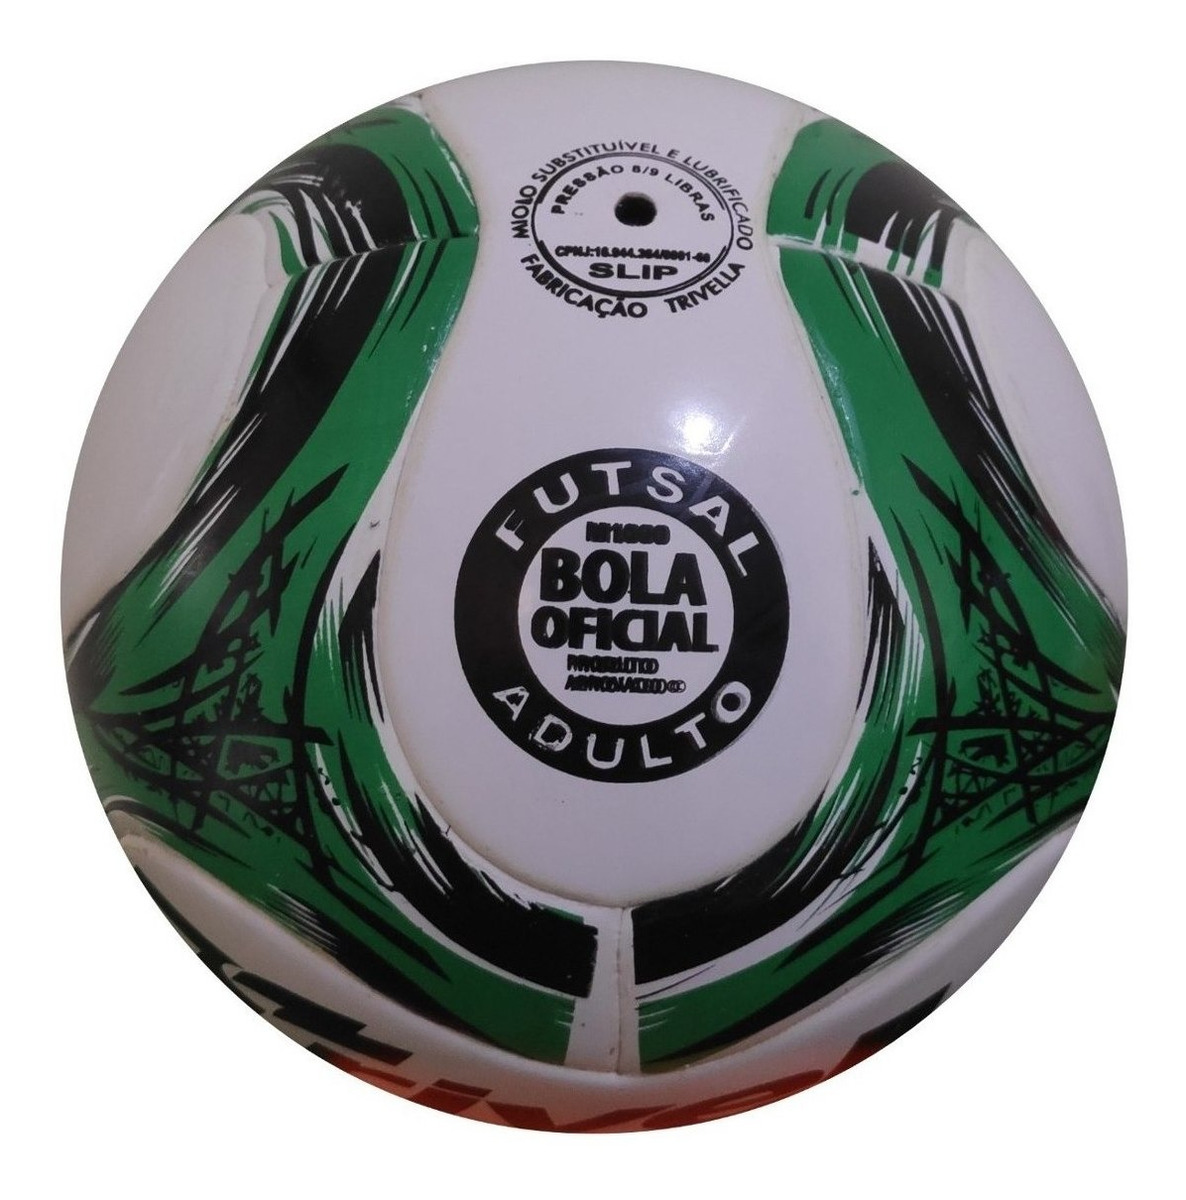 Bola Futebol Futsal Trivella Original Promoção Brasil